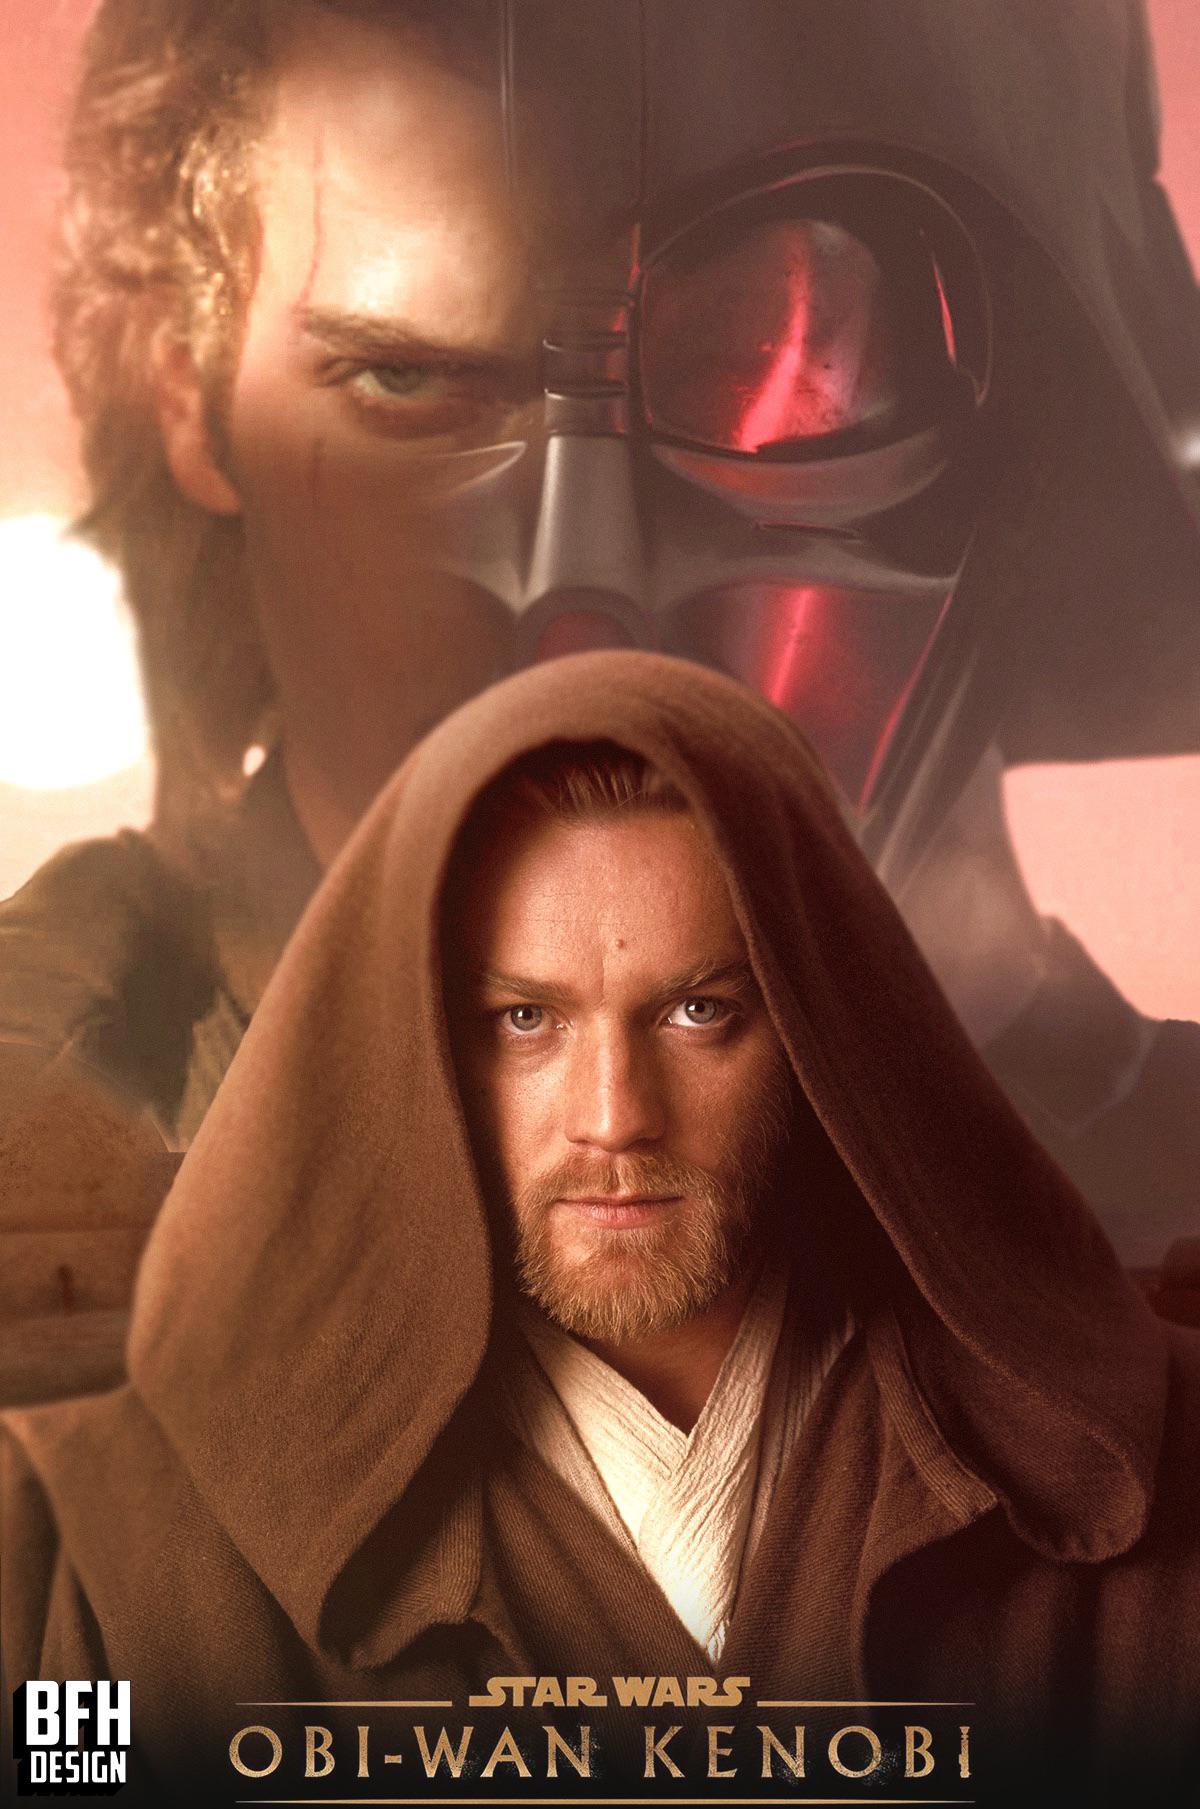 Obi-Wan Kenobi Series: Leaked Concept And Release Date